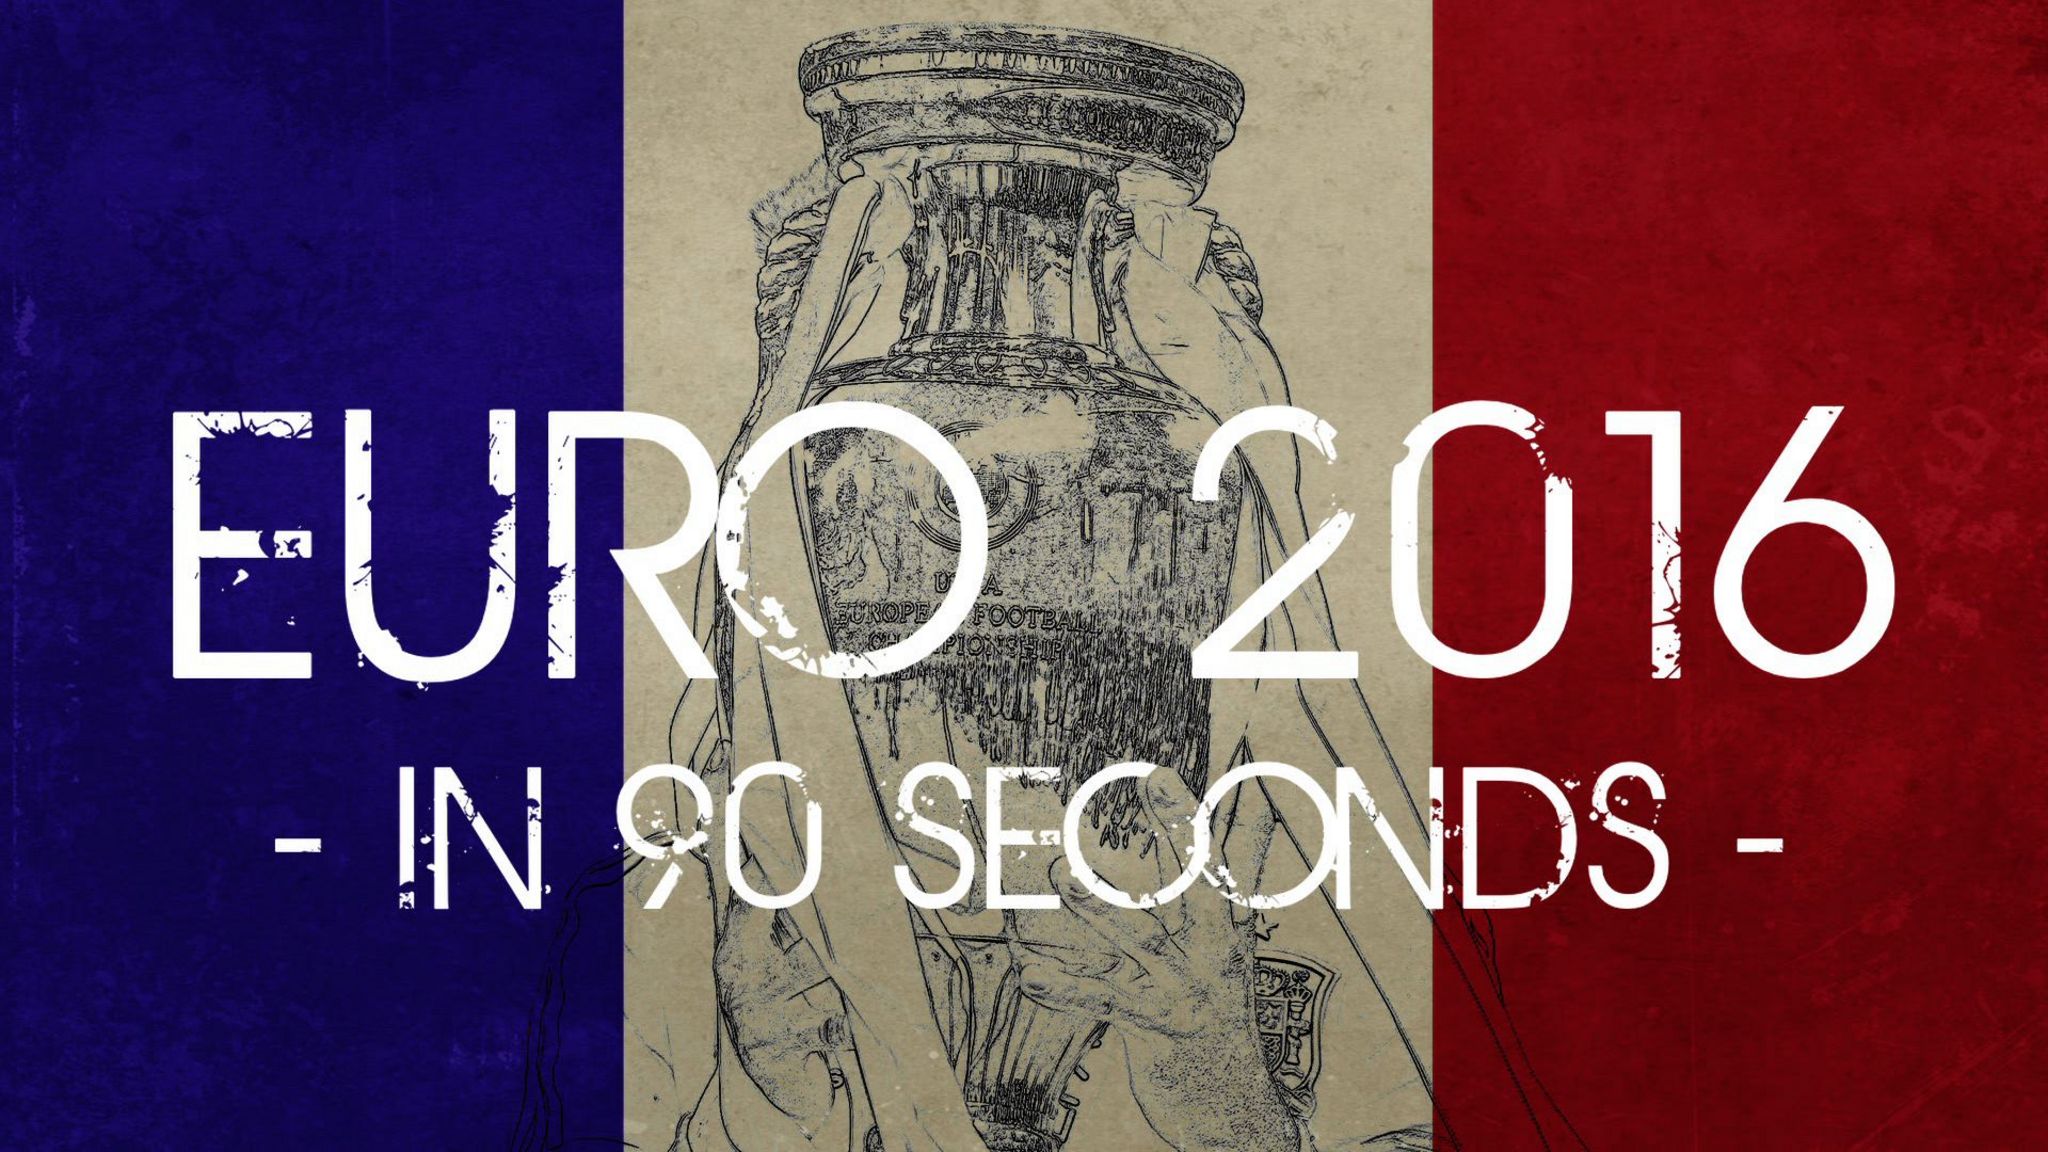 Euro 2016 in 90 seconds